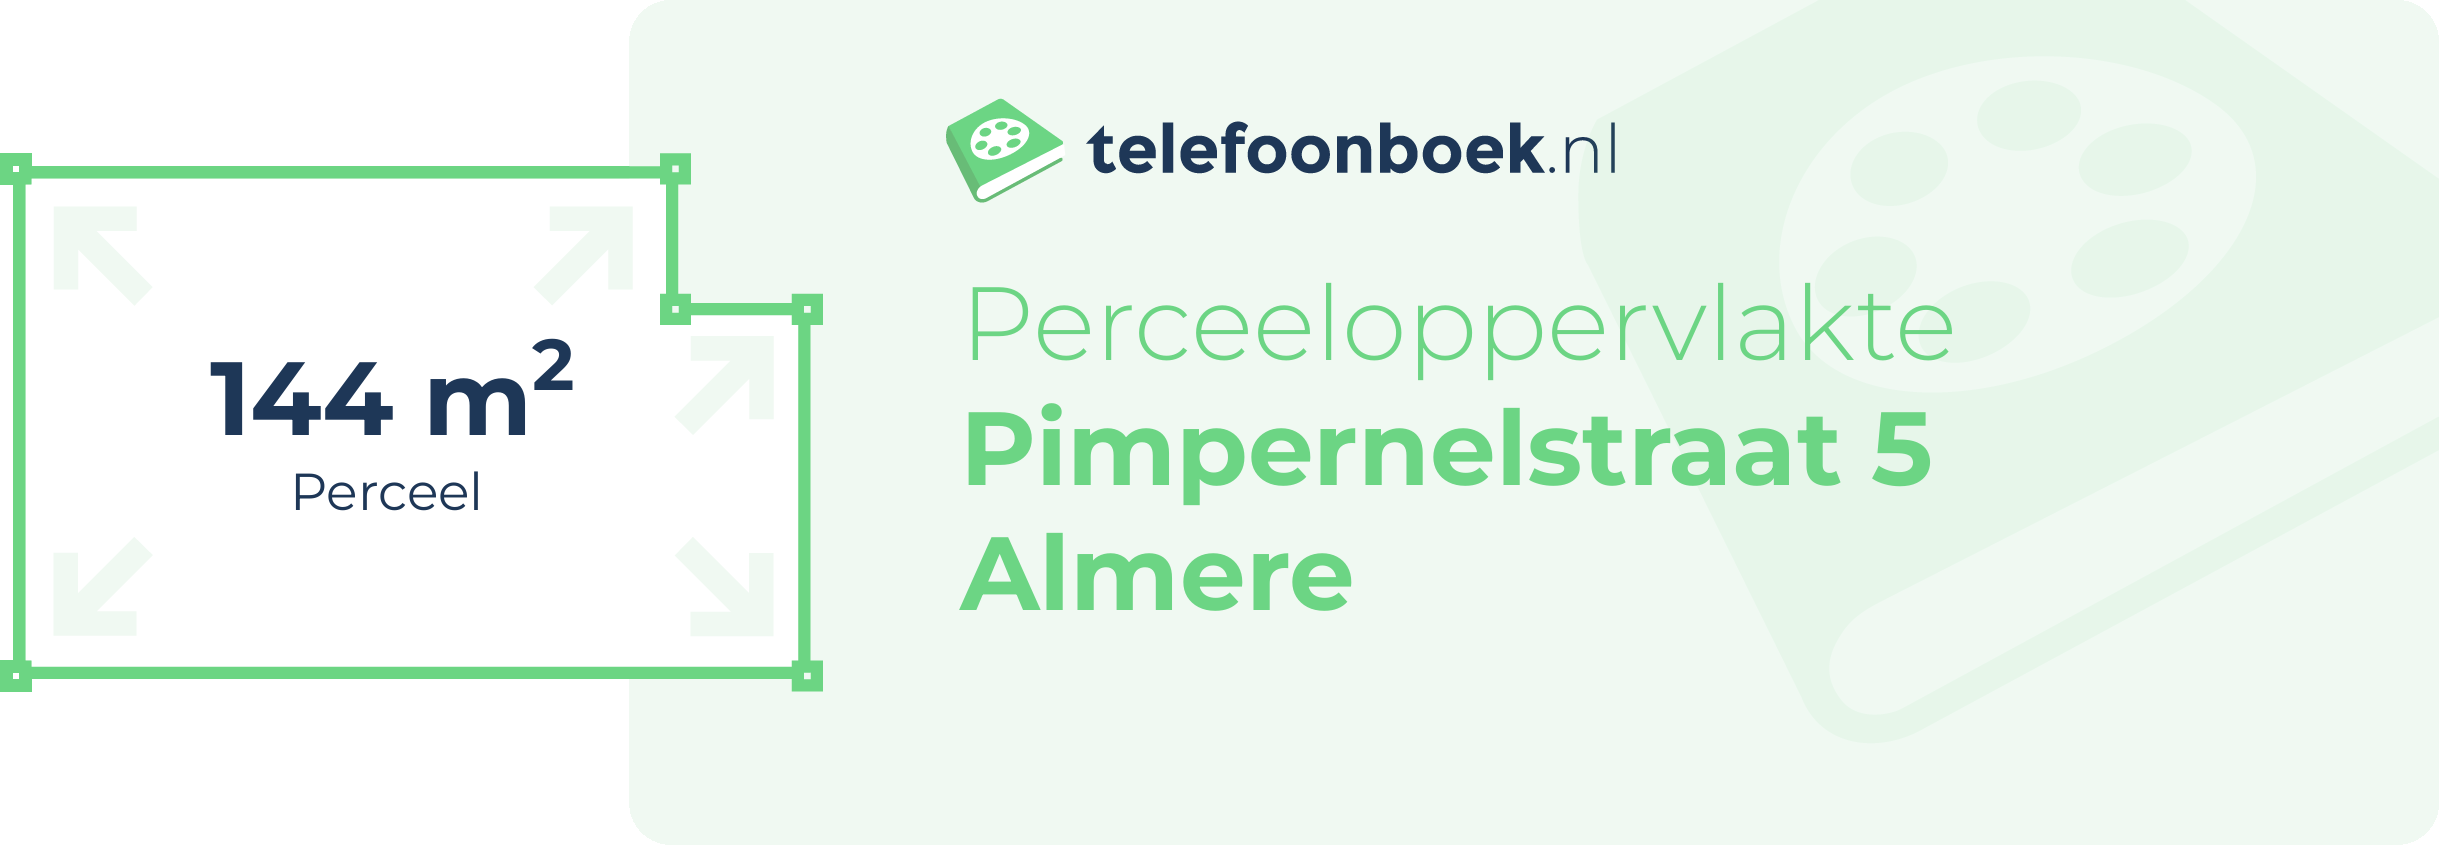 Perceeloppervlakte Pimpernelstraat 5 Almere